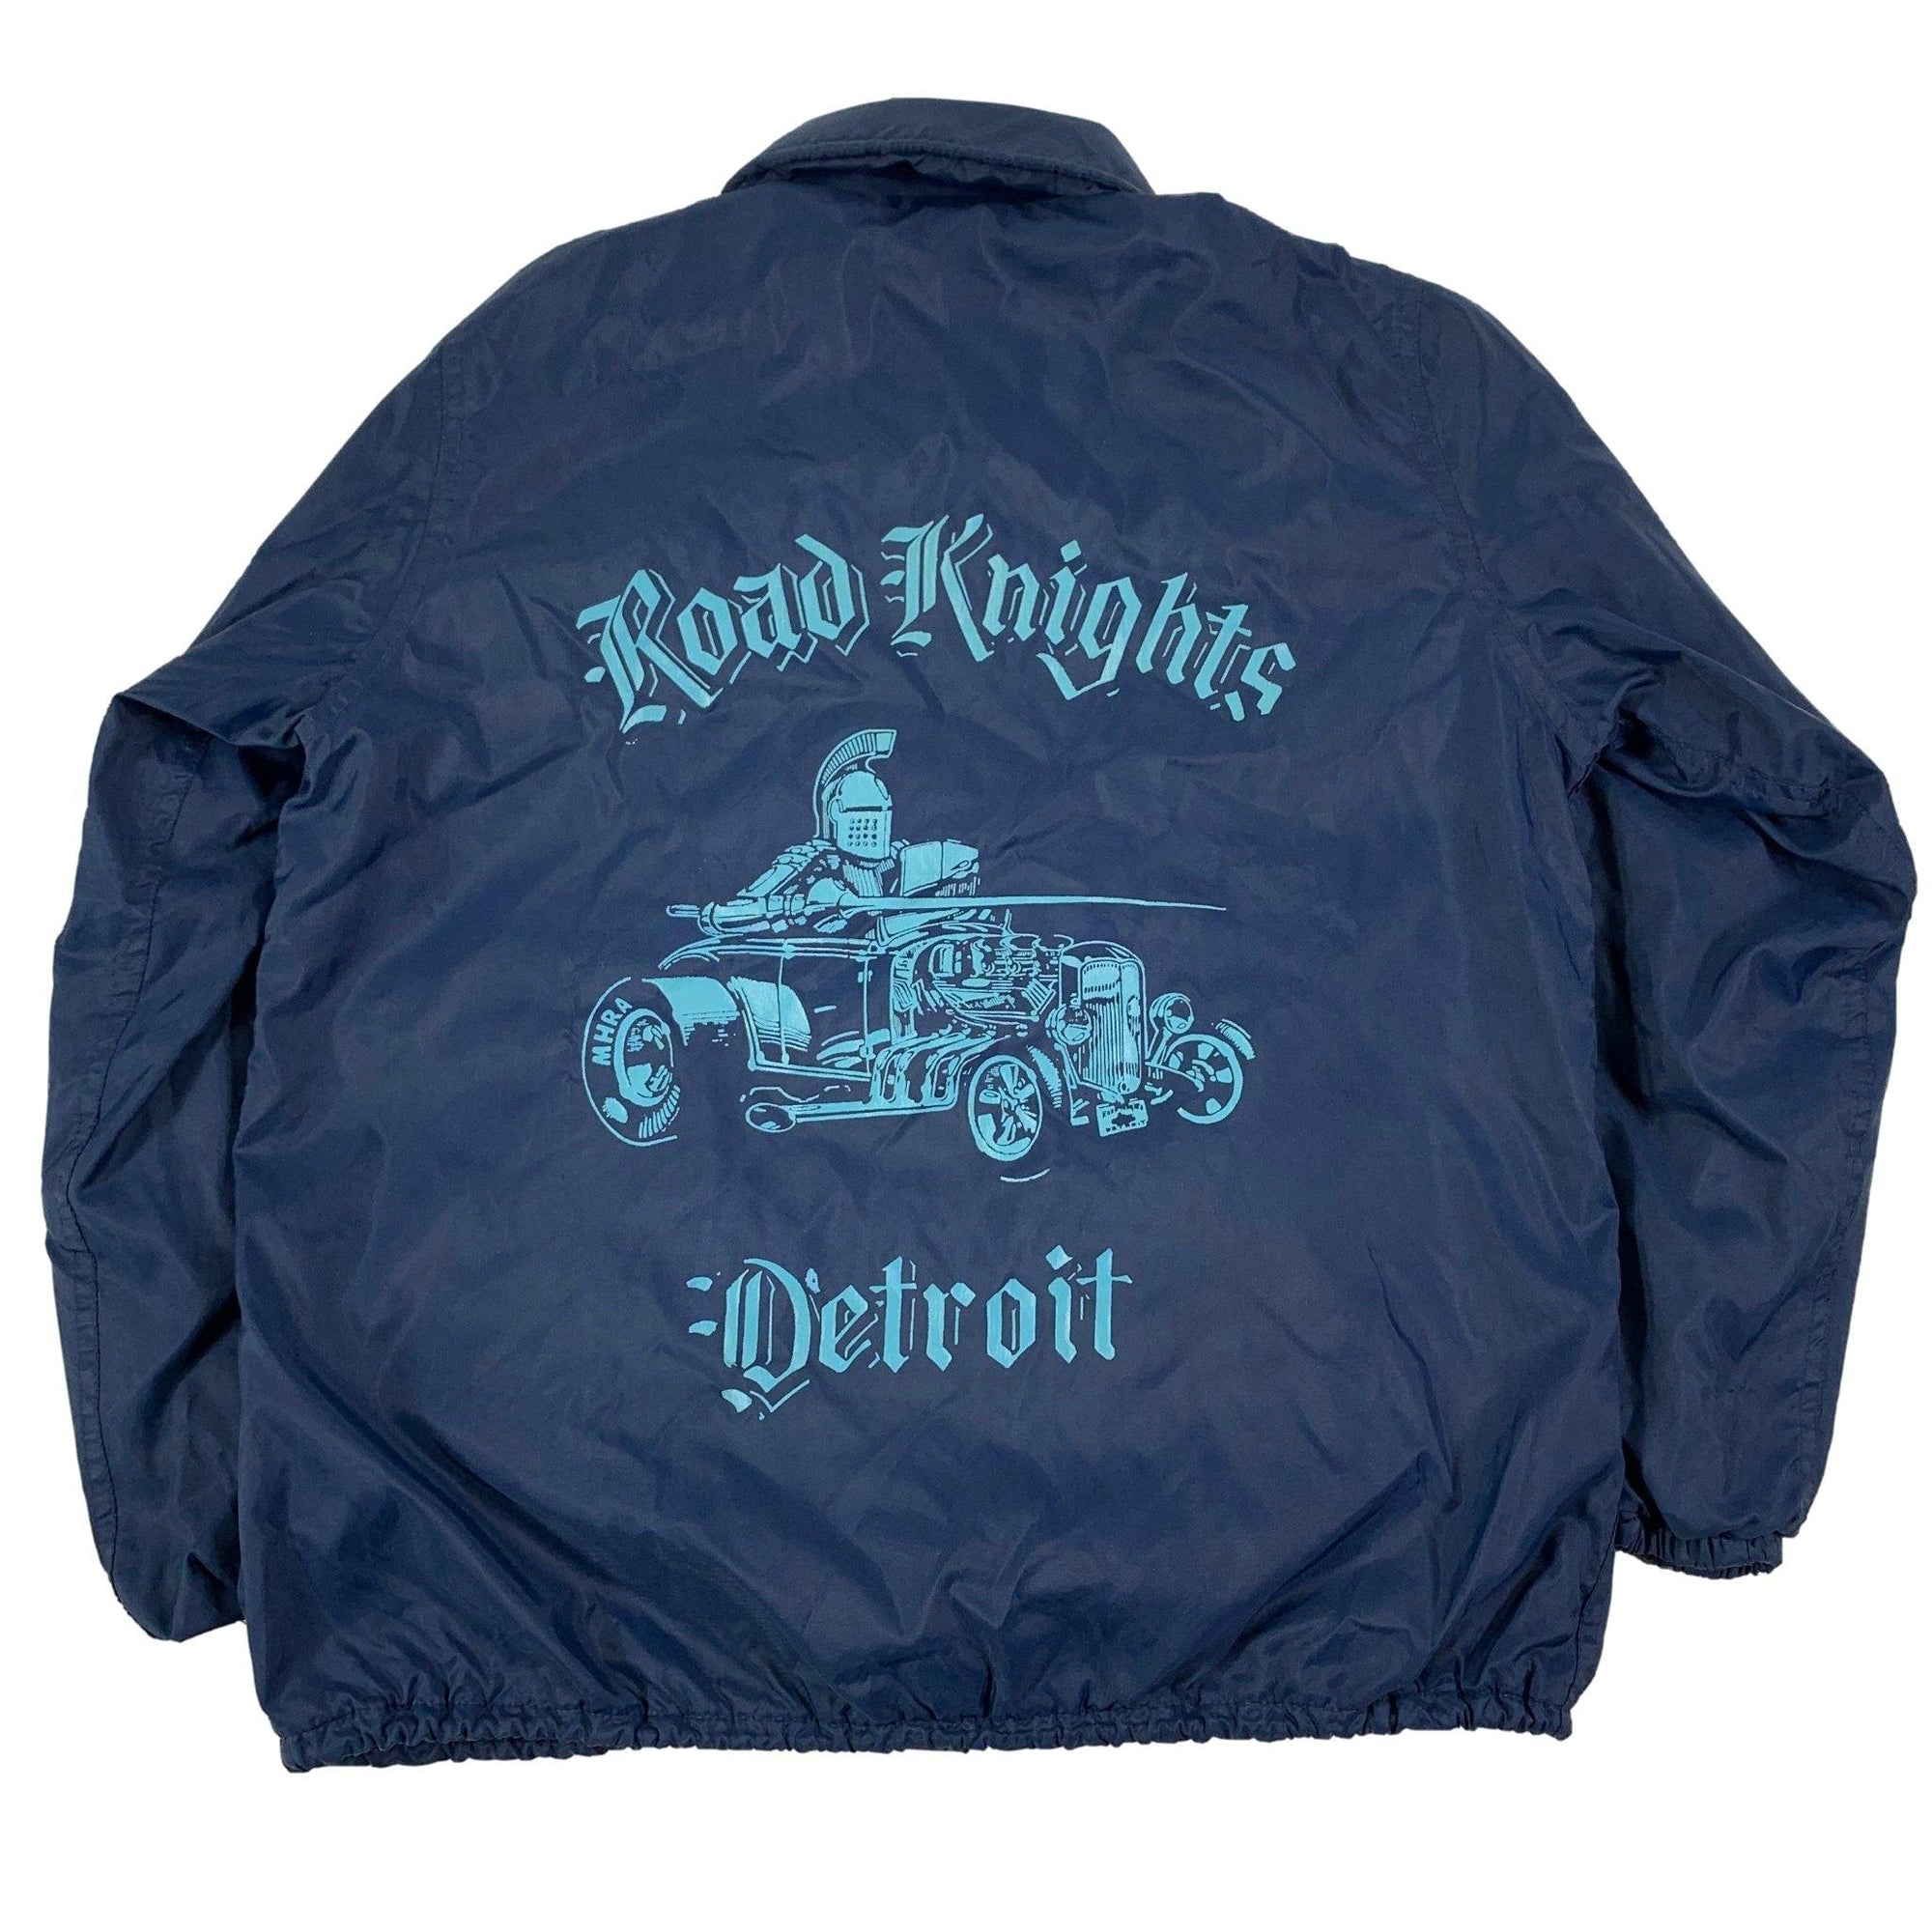 Vintage Road Knights Car Club Jacket - jointcustodydc